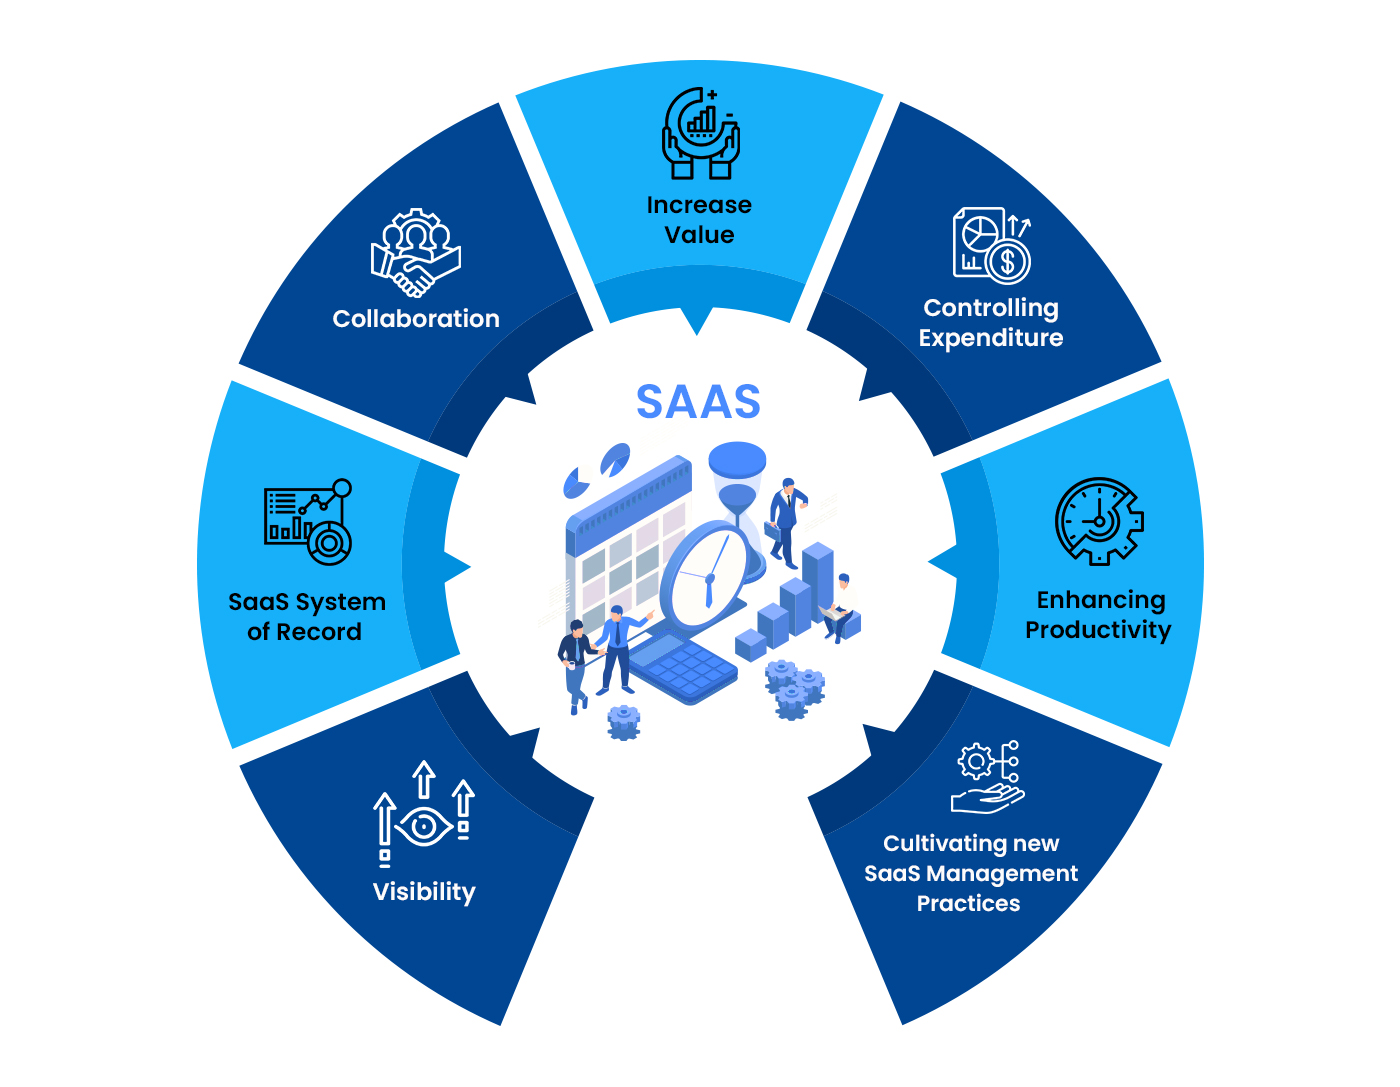 Goals of SaaS Management